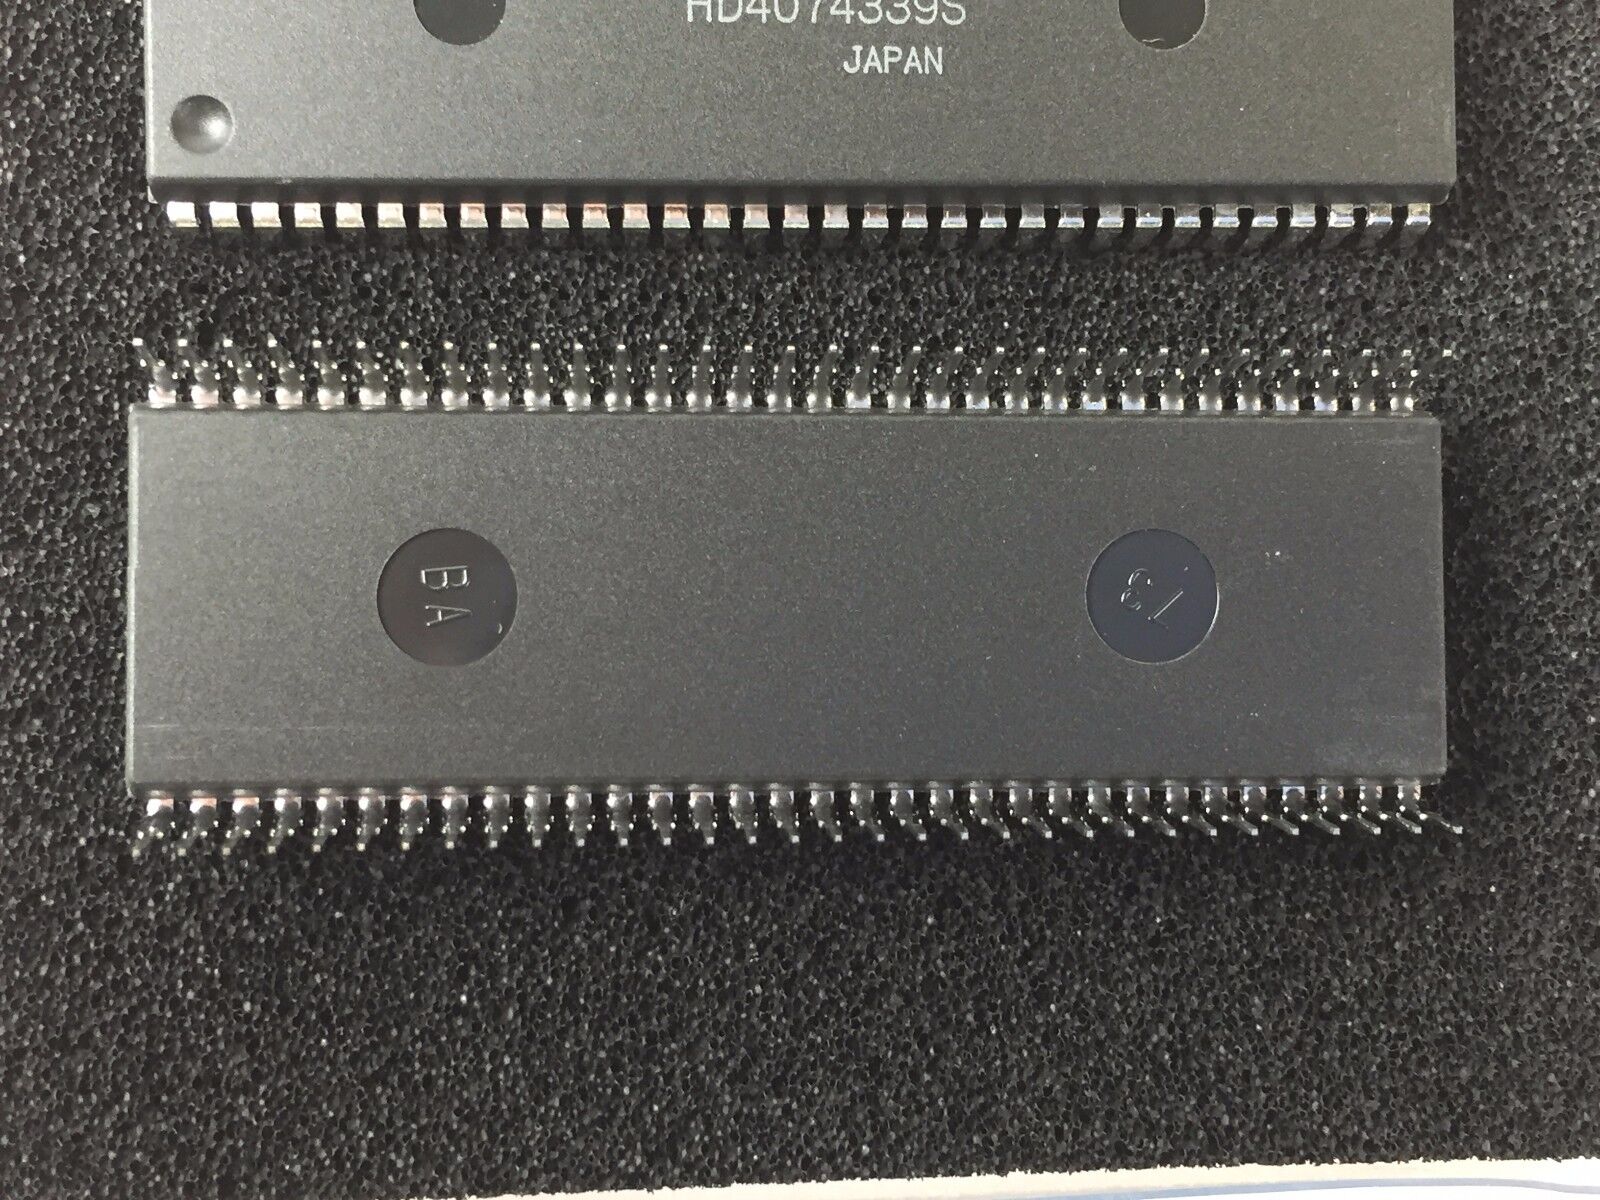 Hitachi 7K1 HD4074339S ZTAT Microcomputer DIP-64 - Lot of (10)